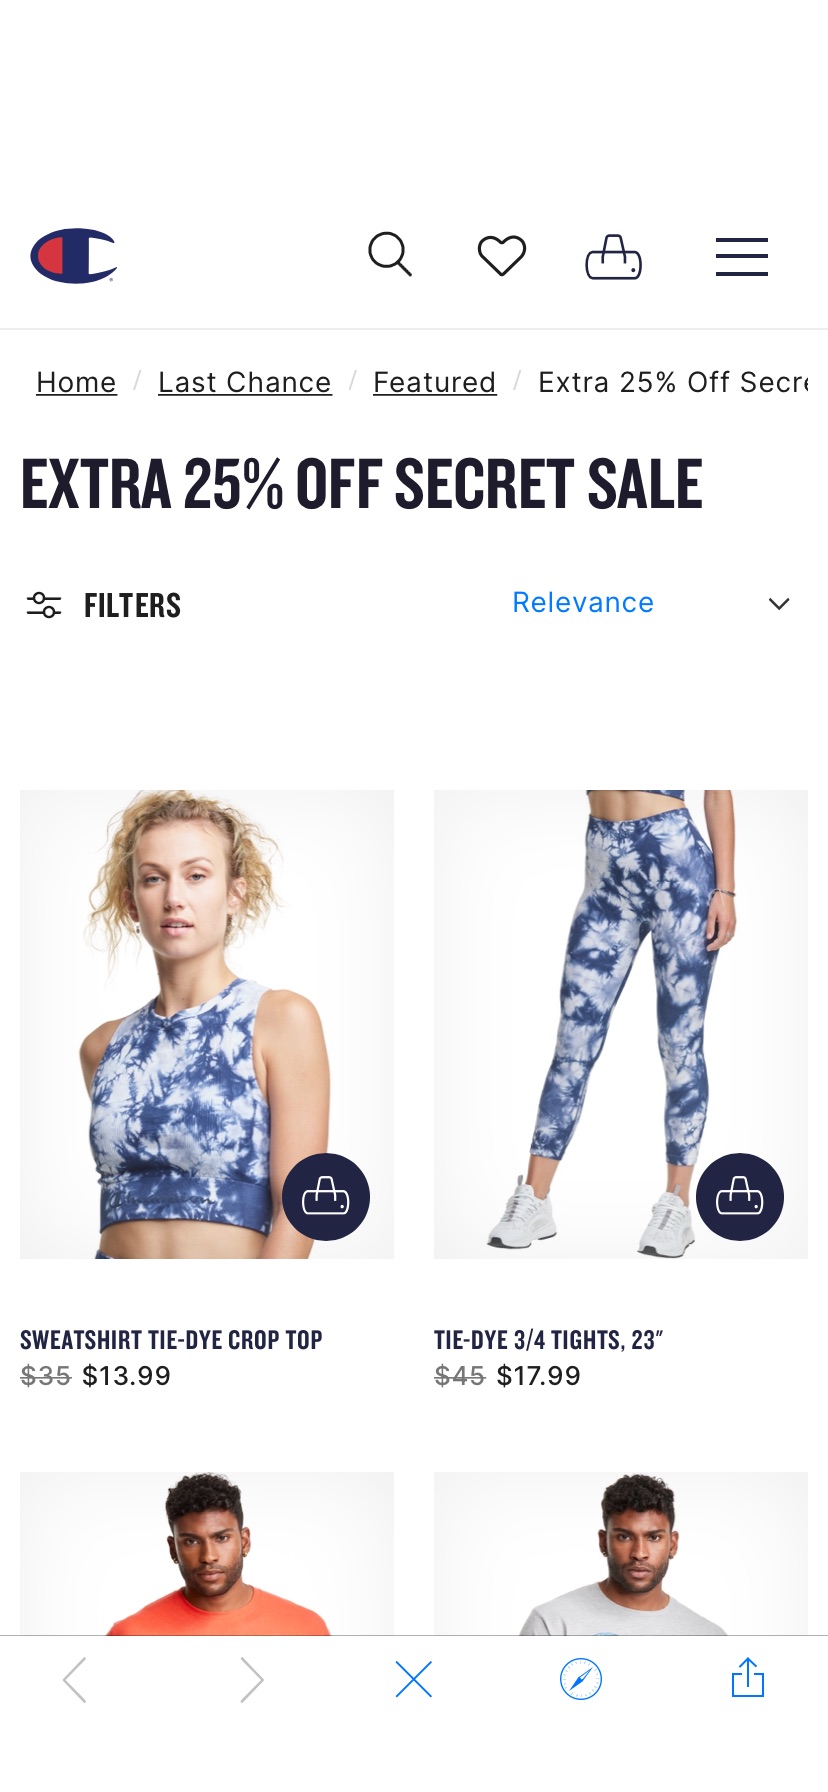 Extra 25% Off Secret Sale 促销 折扣码wow25